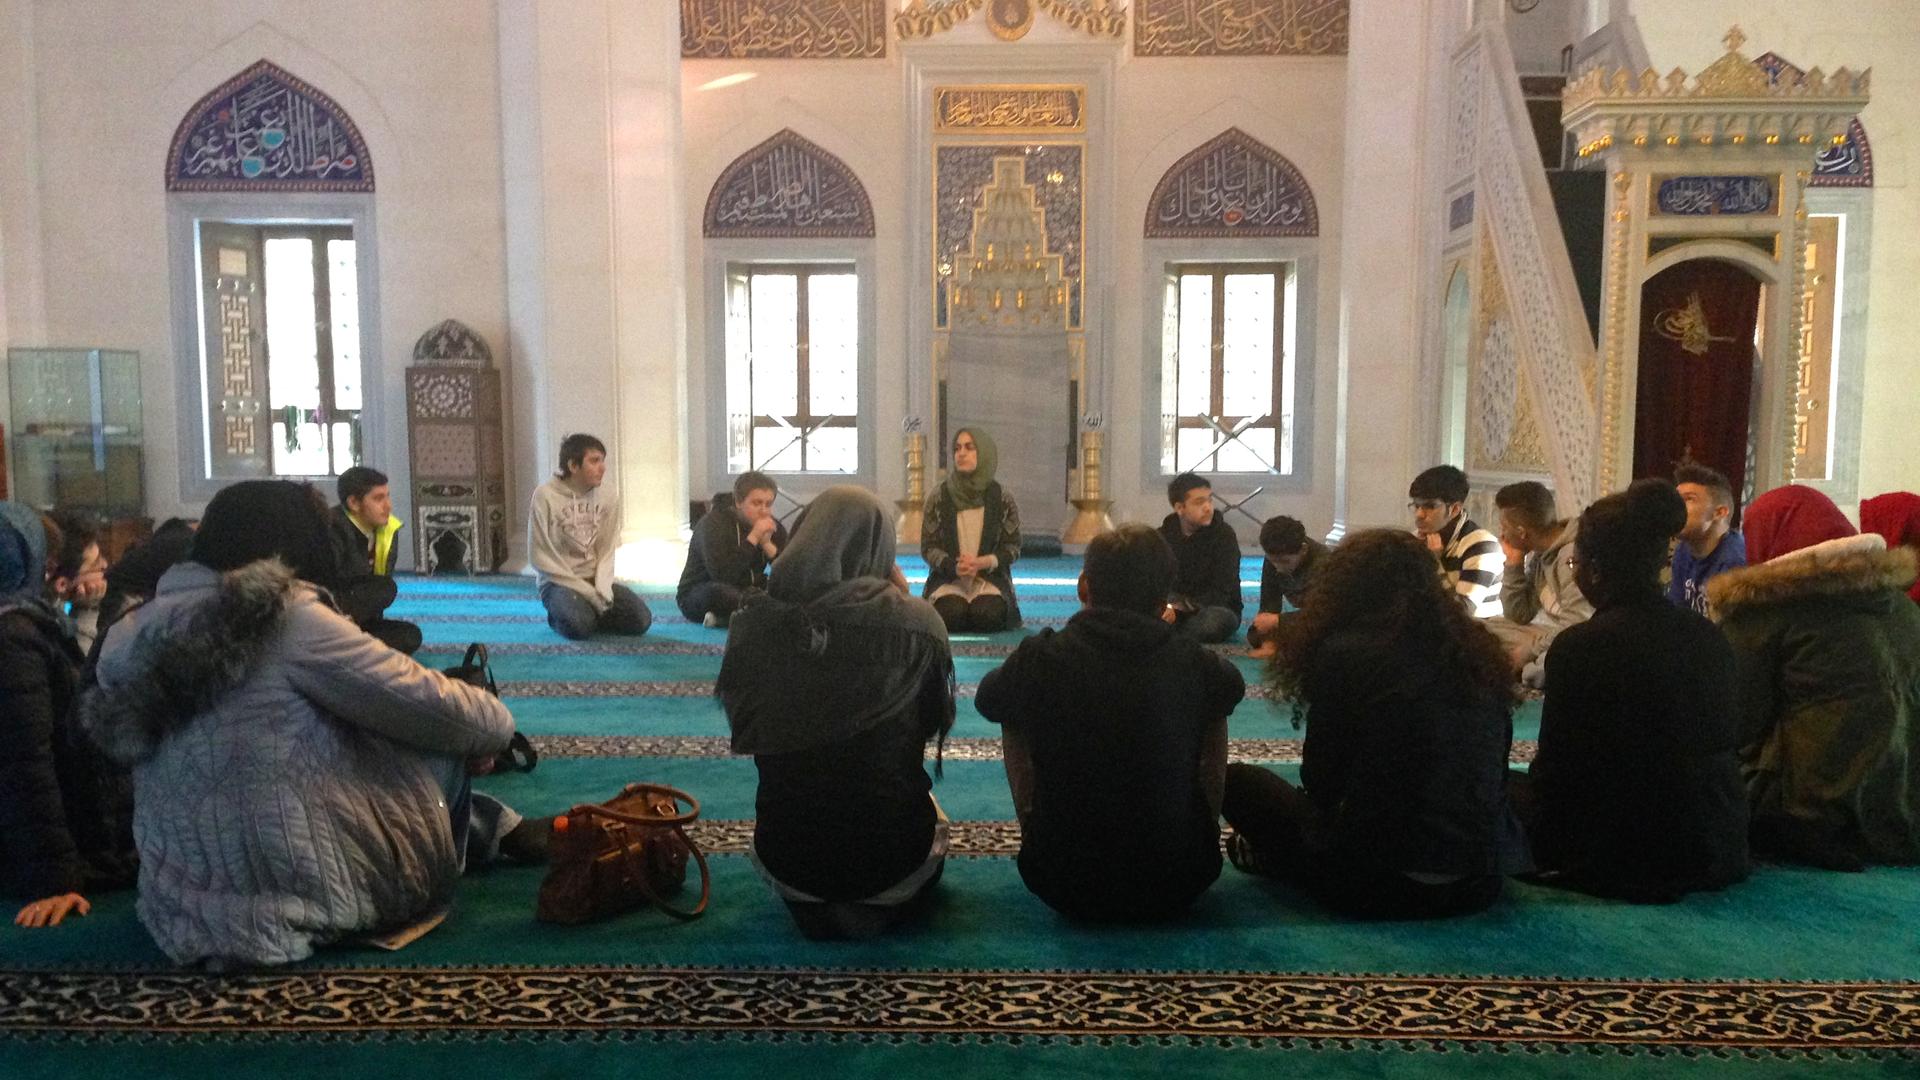 Betul Ulusoy (center back) leads an educational tour of Sehitlik Mosque in Berlin. 